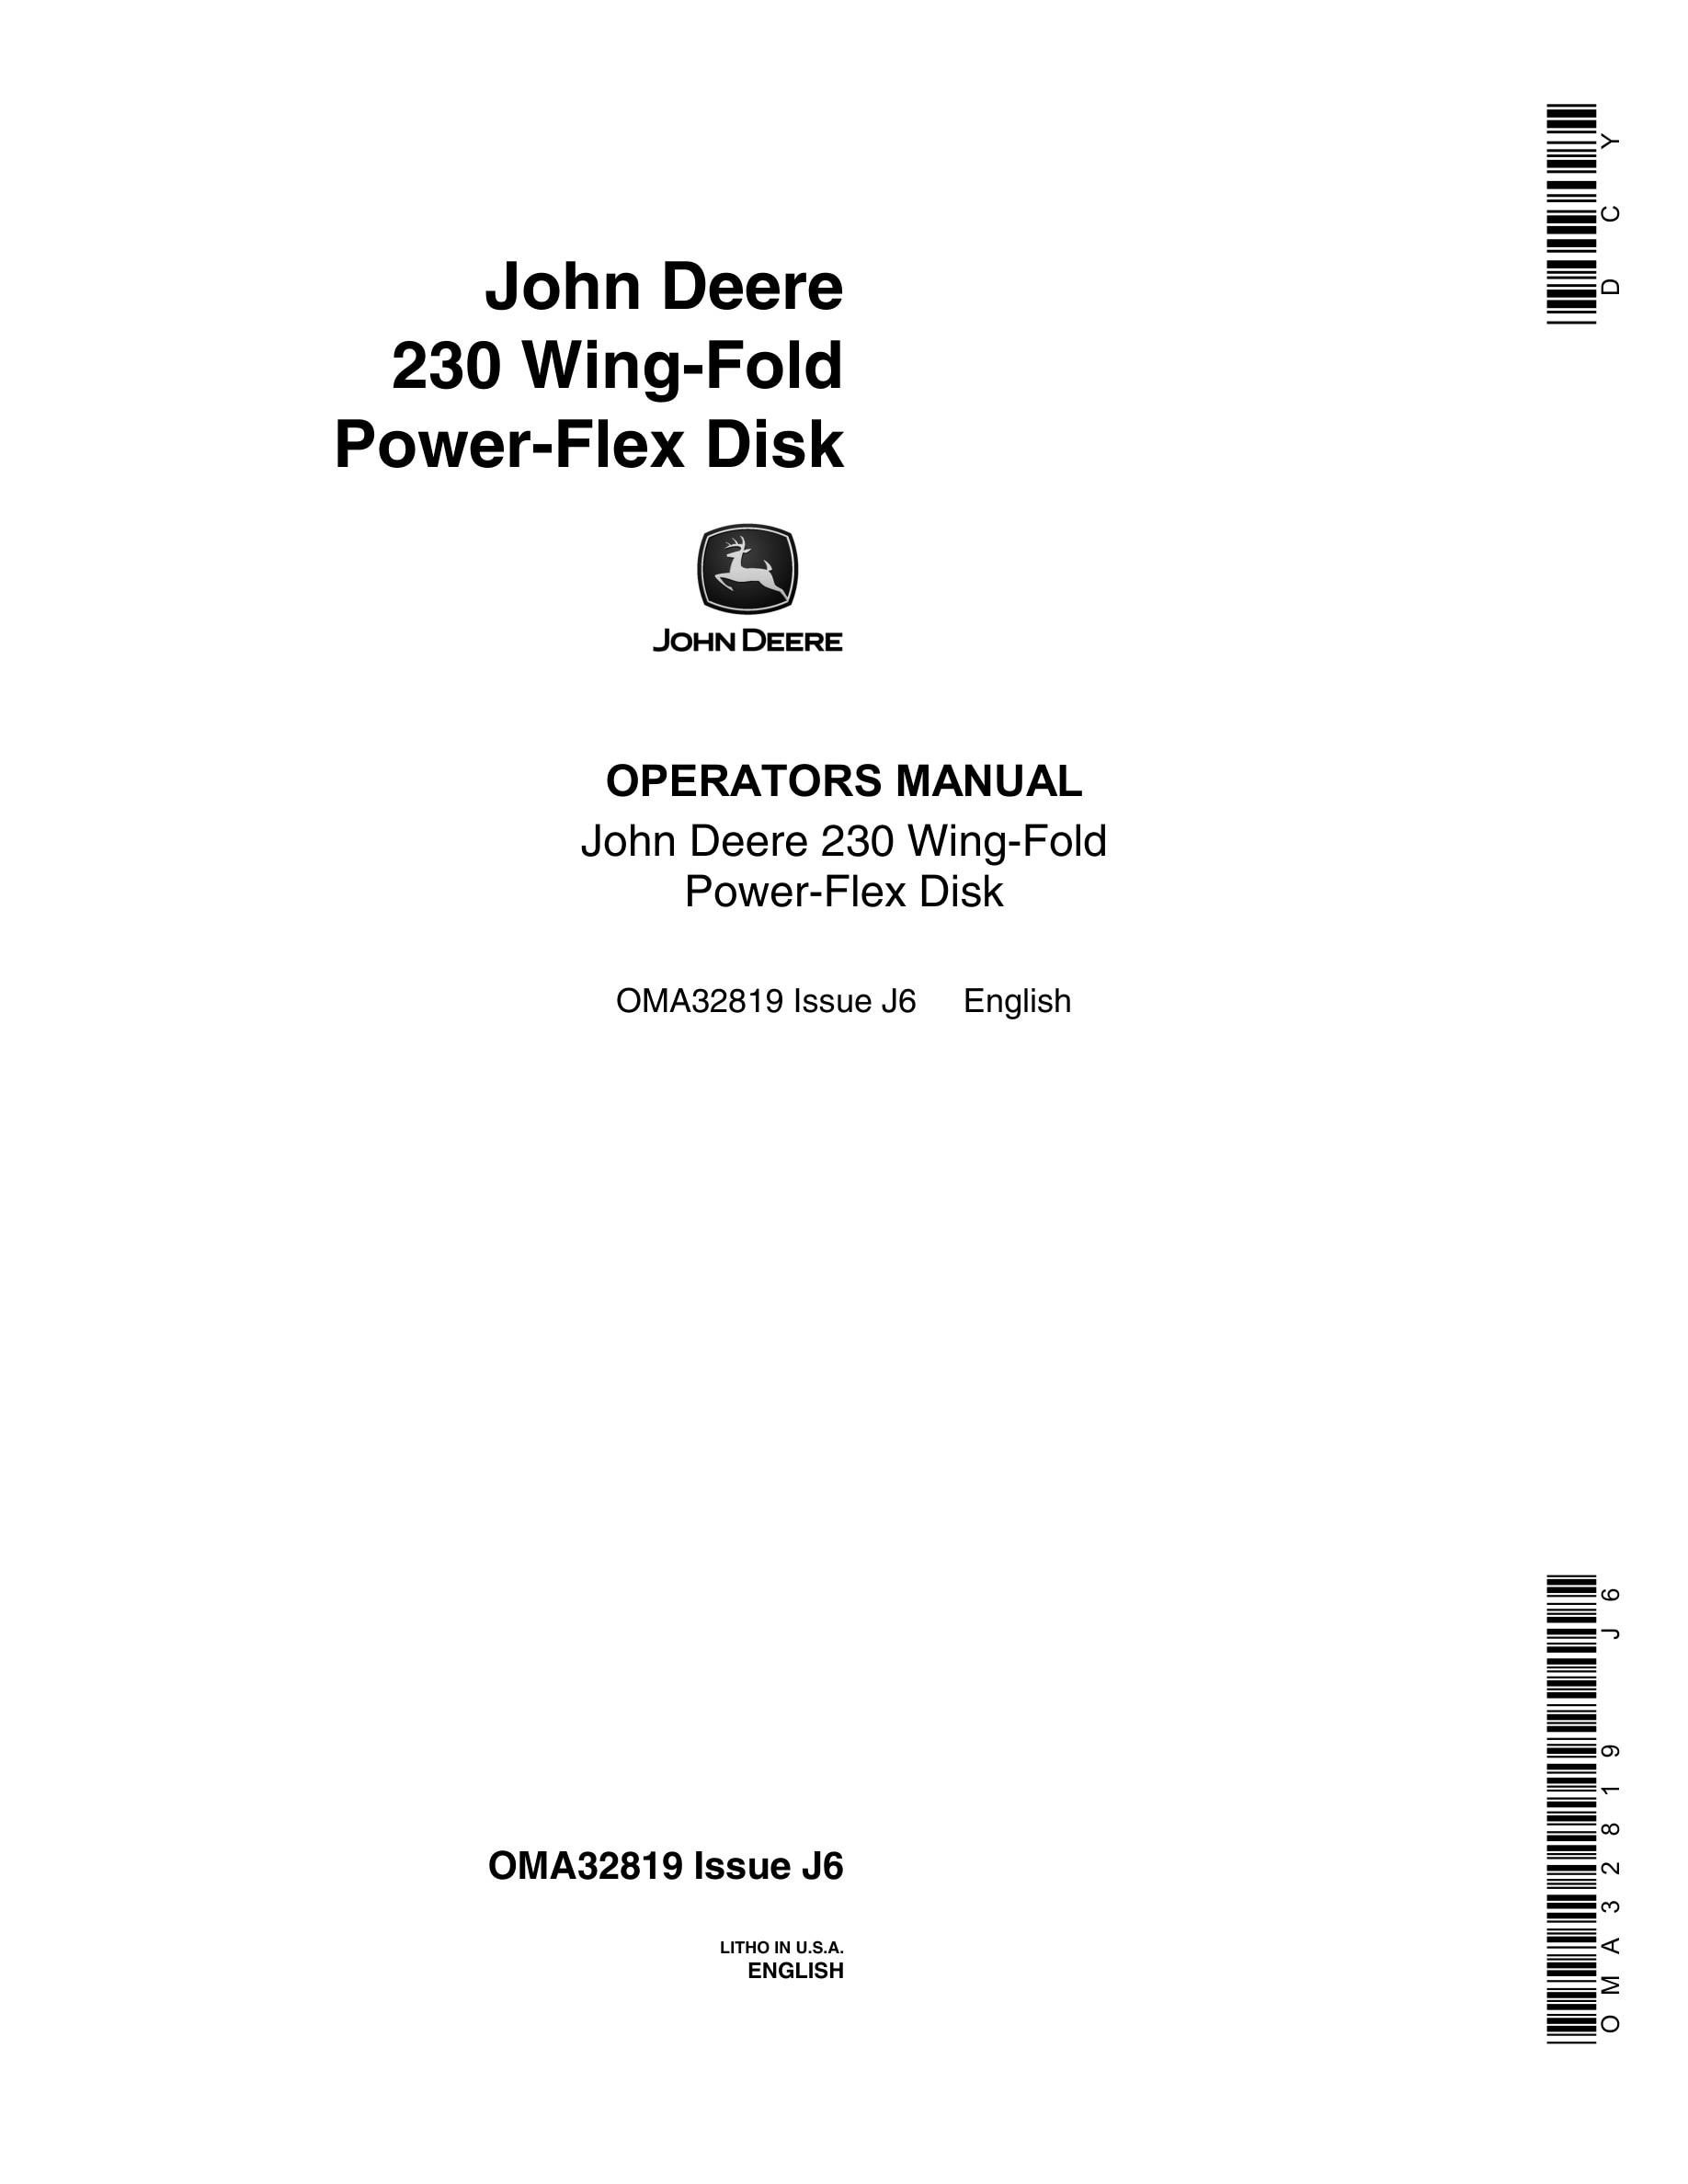 John Deere 230 Wing-Fold Power-Flex Disk Operator Manual OMA32819-1